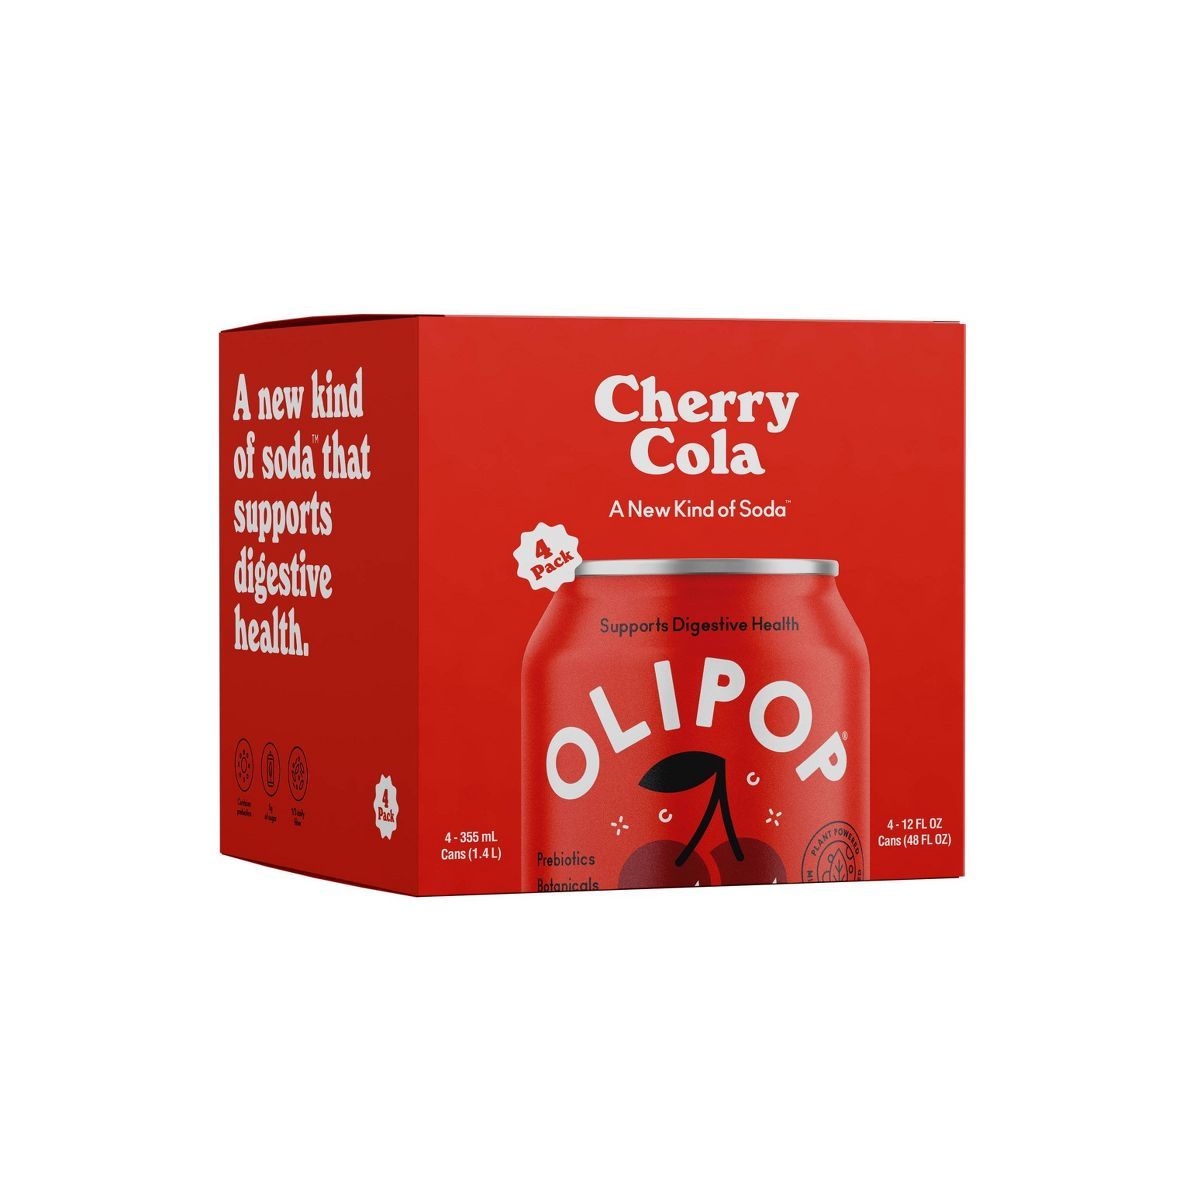 OLIPOP Cherry Cola Prebiotic Soda - 4ct/12 fl oz | Target